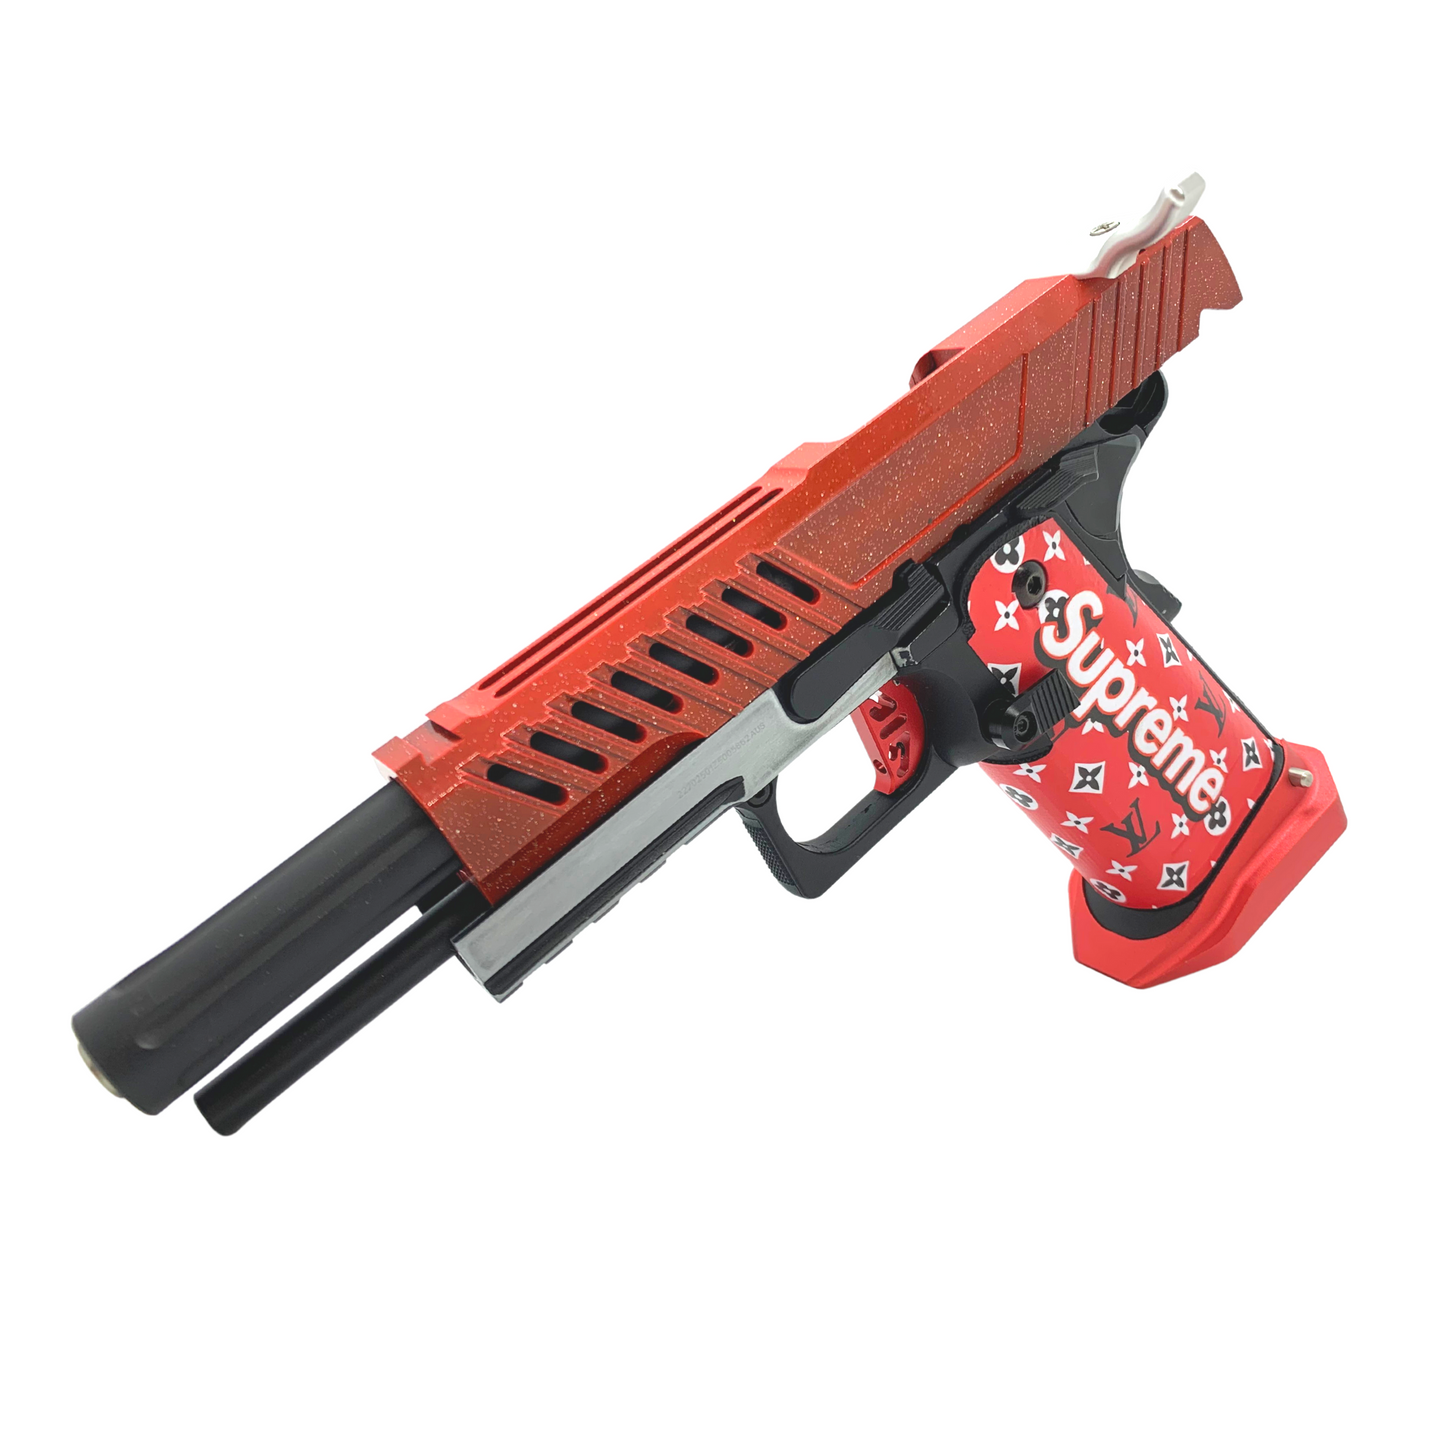 "Royal Supreme" 5.1 Competition GBU Pistol - Gel Blaster